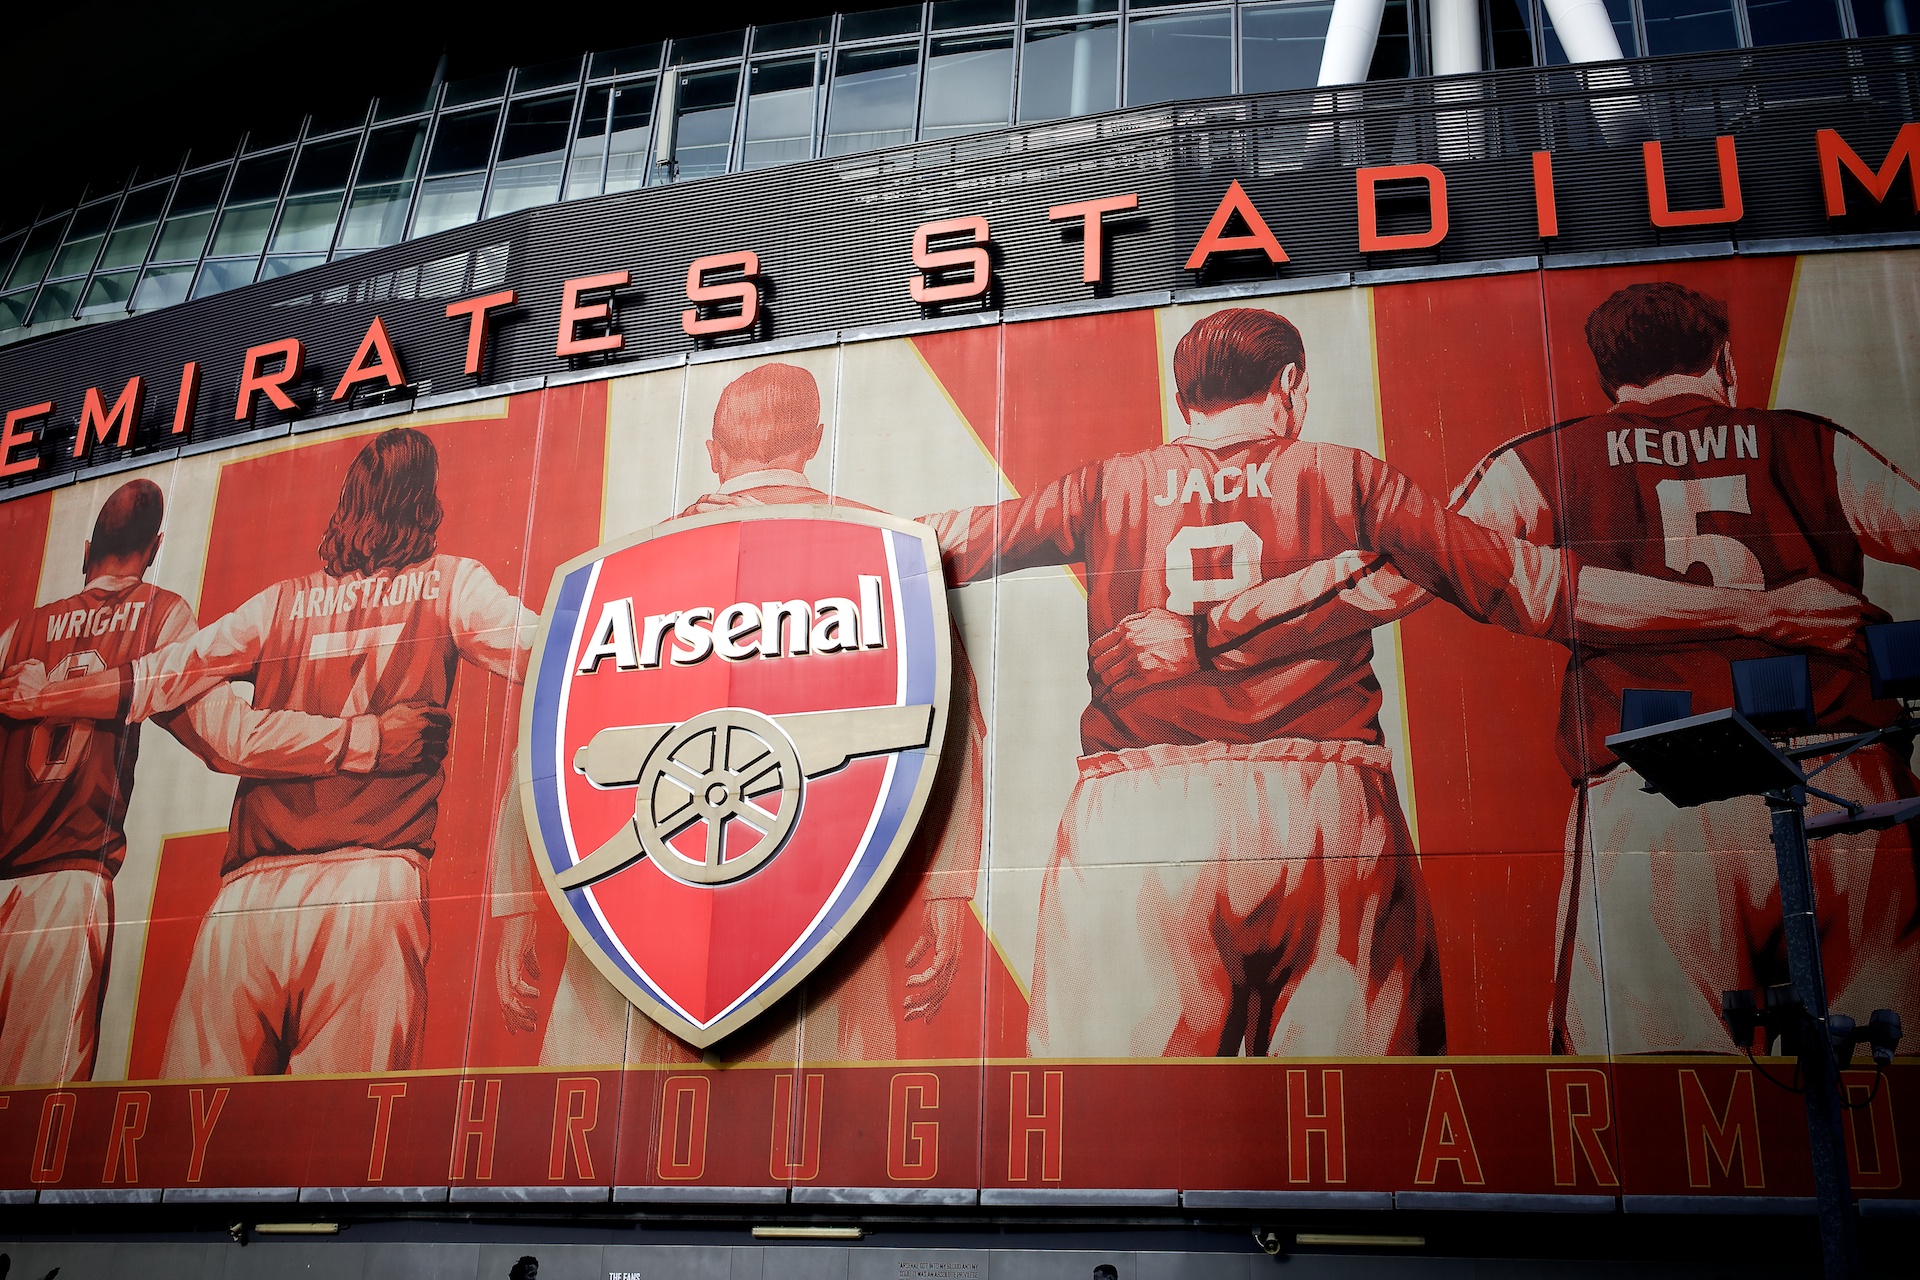 Emirates Arsenal stadium